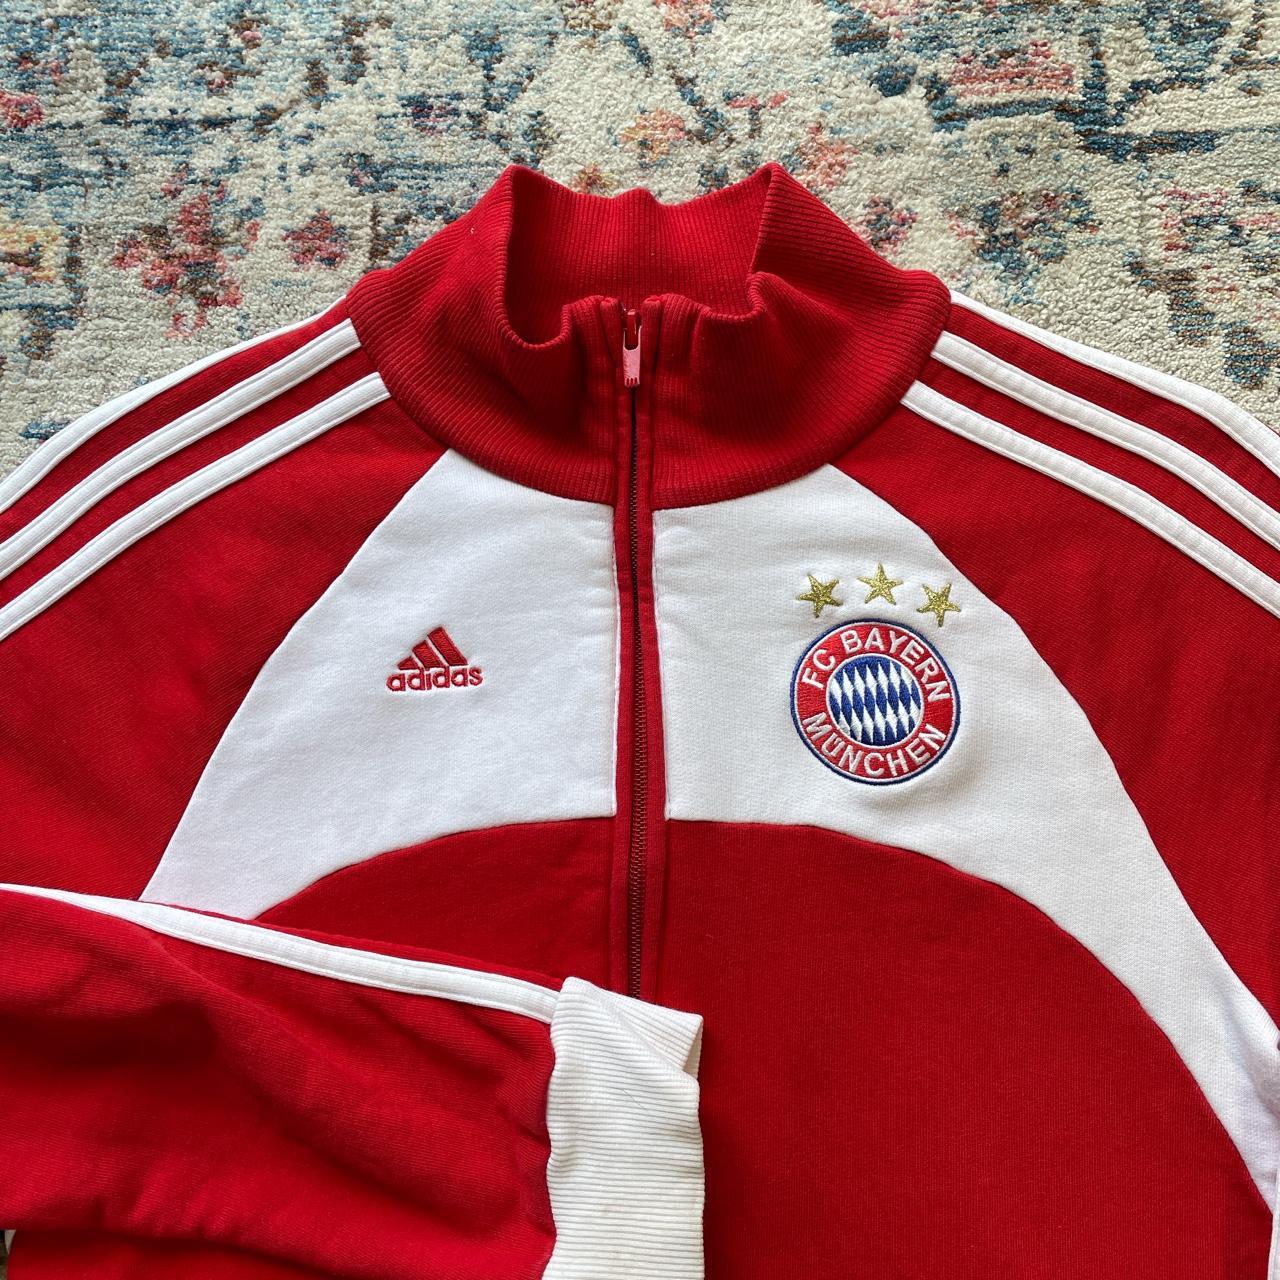 Vintage Adidas Bayern Munich Red and White Jacket